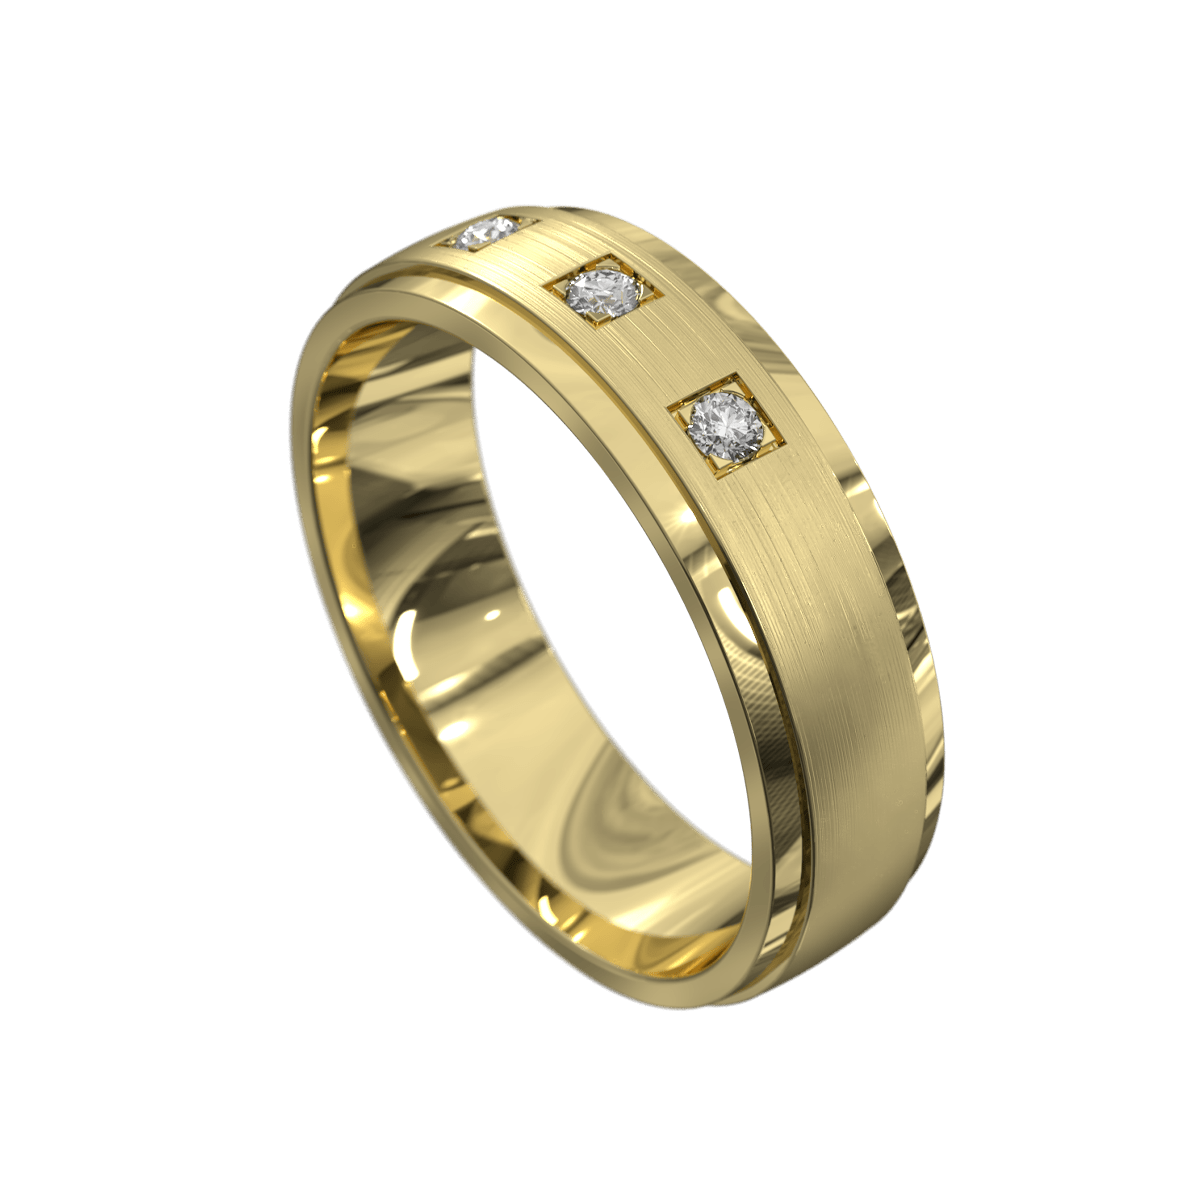 Premium Stylish Yellow Gold Brushed Men's Wedding Ring